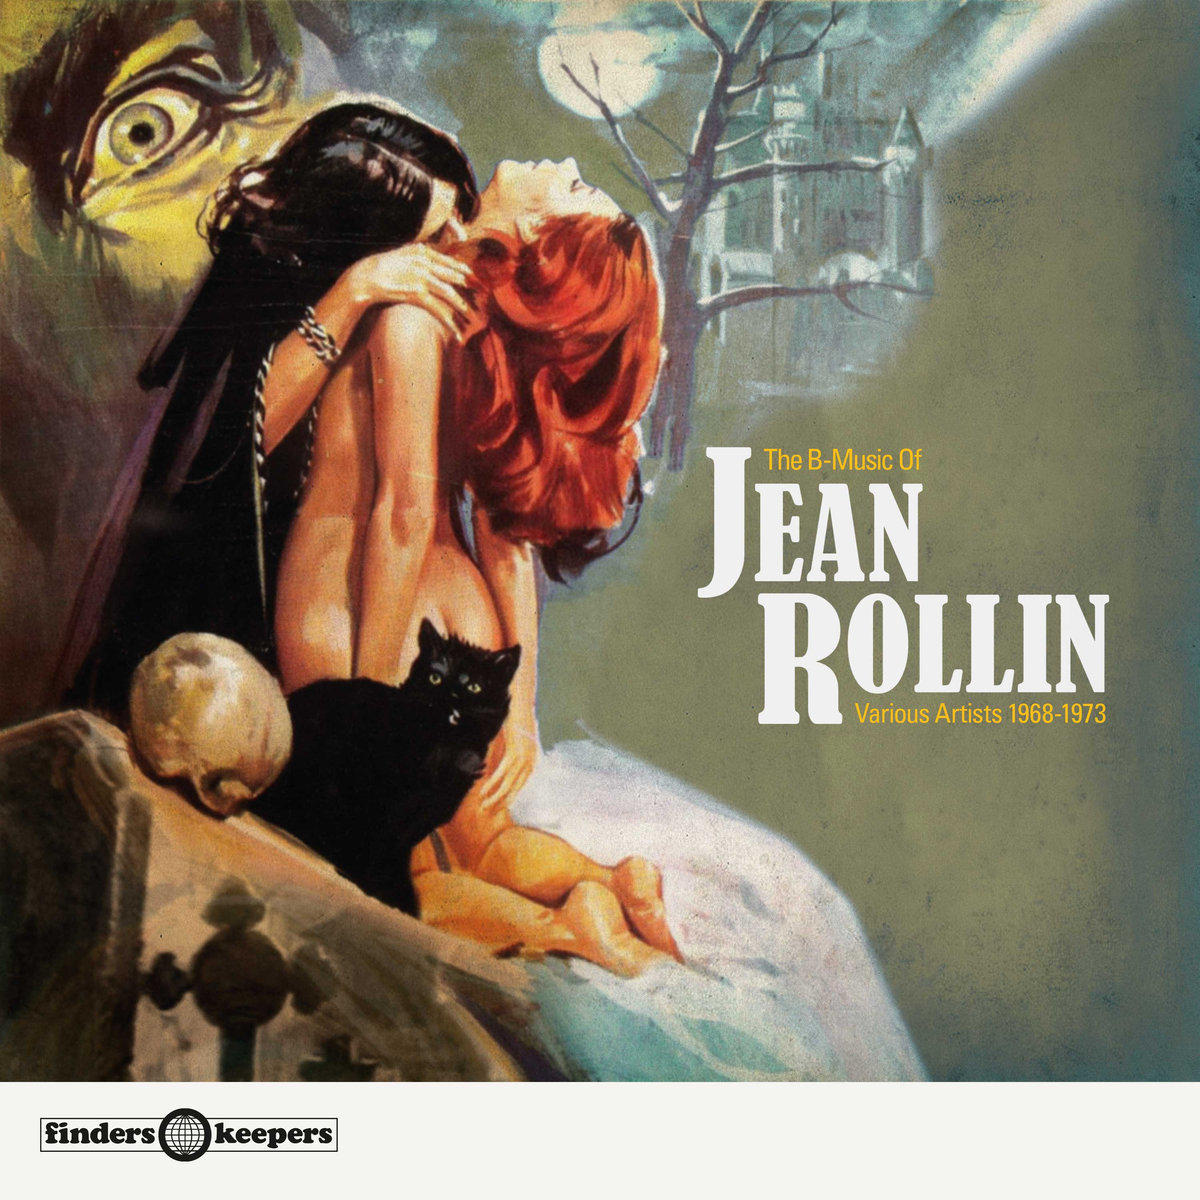 The B-Music of Jean Rollin 1968-1973